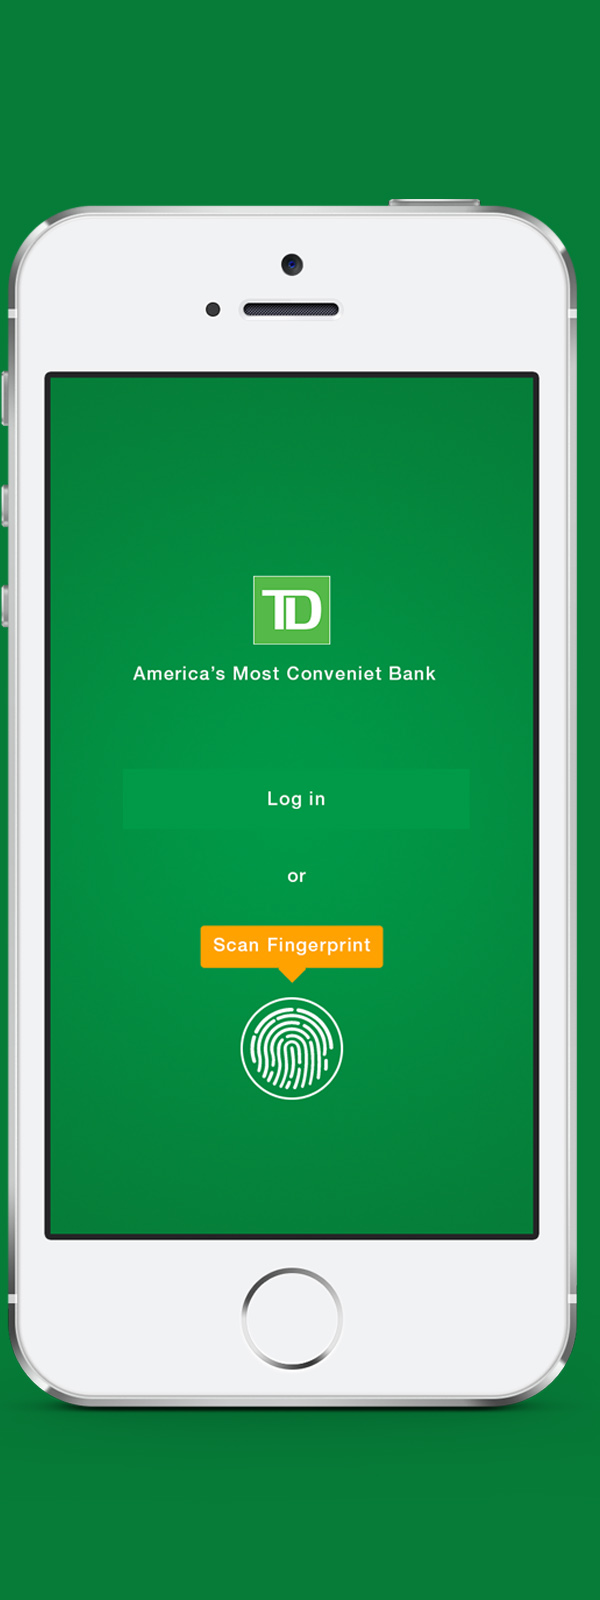 Bank app td bank clean Interface UI user interface bank app  Mobile Deposit interface design